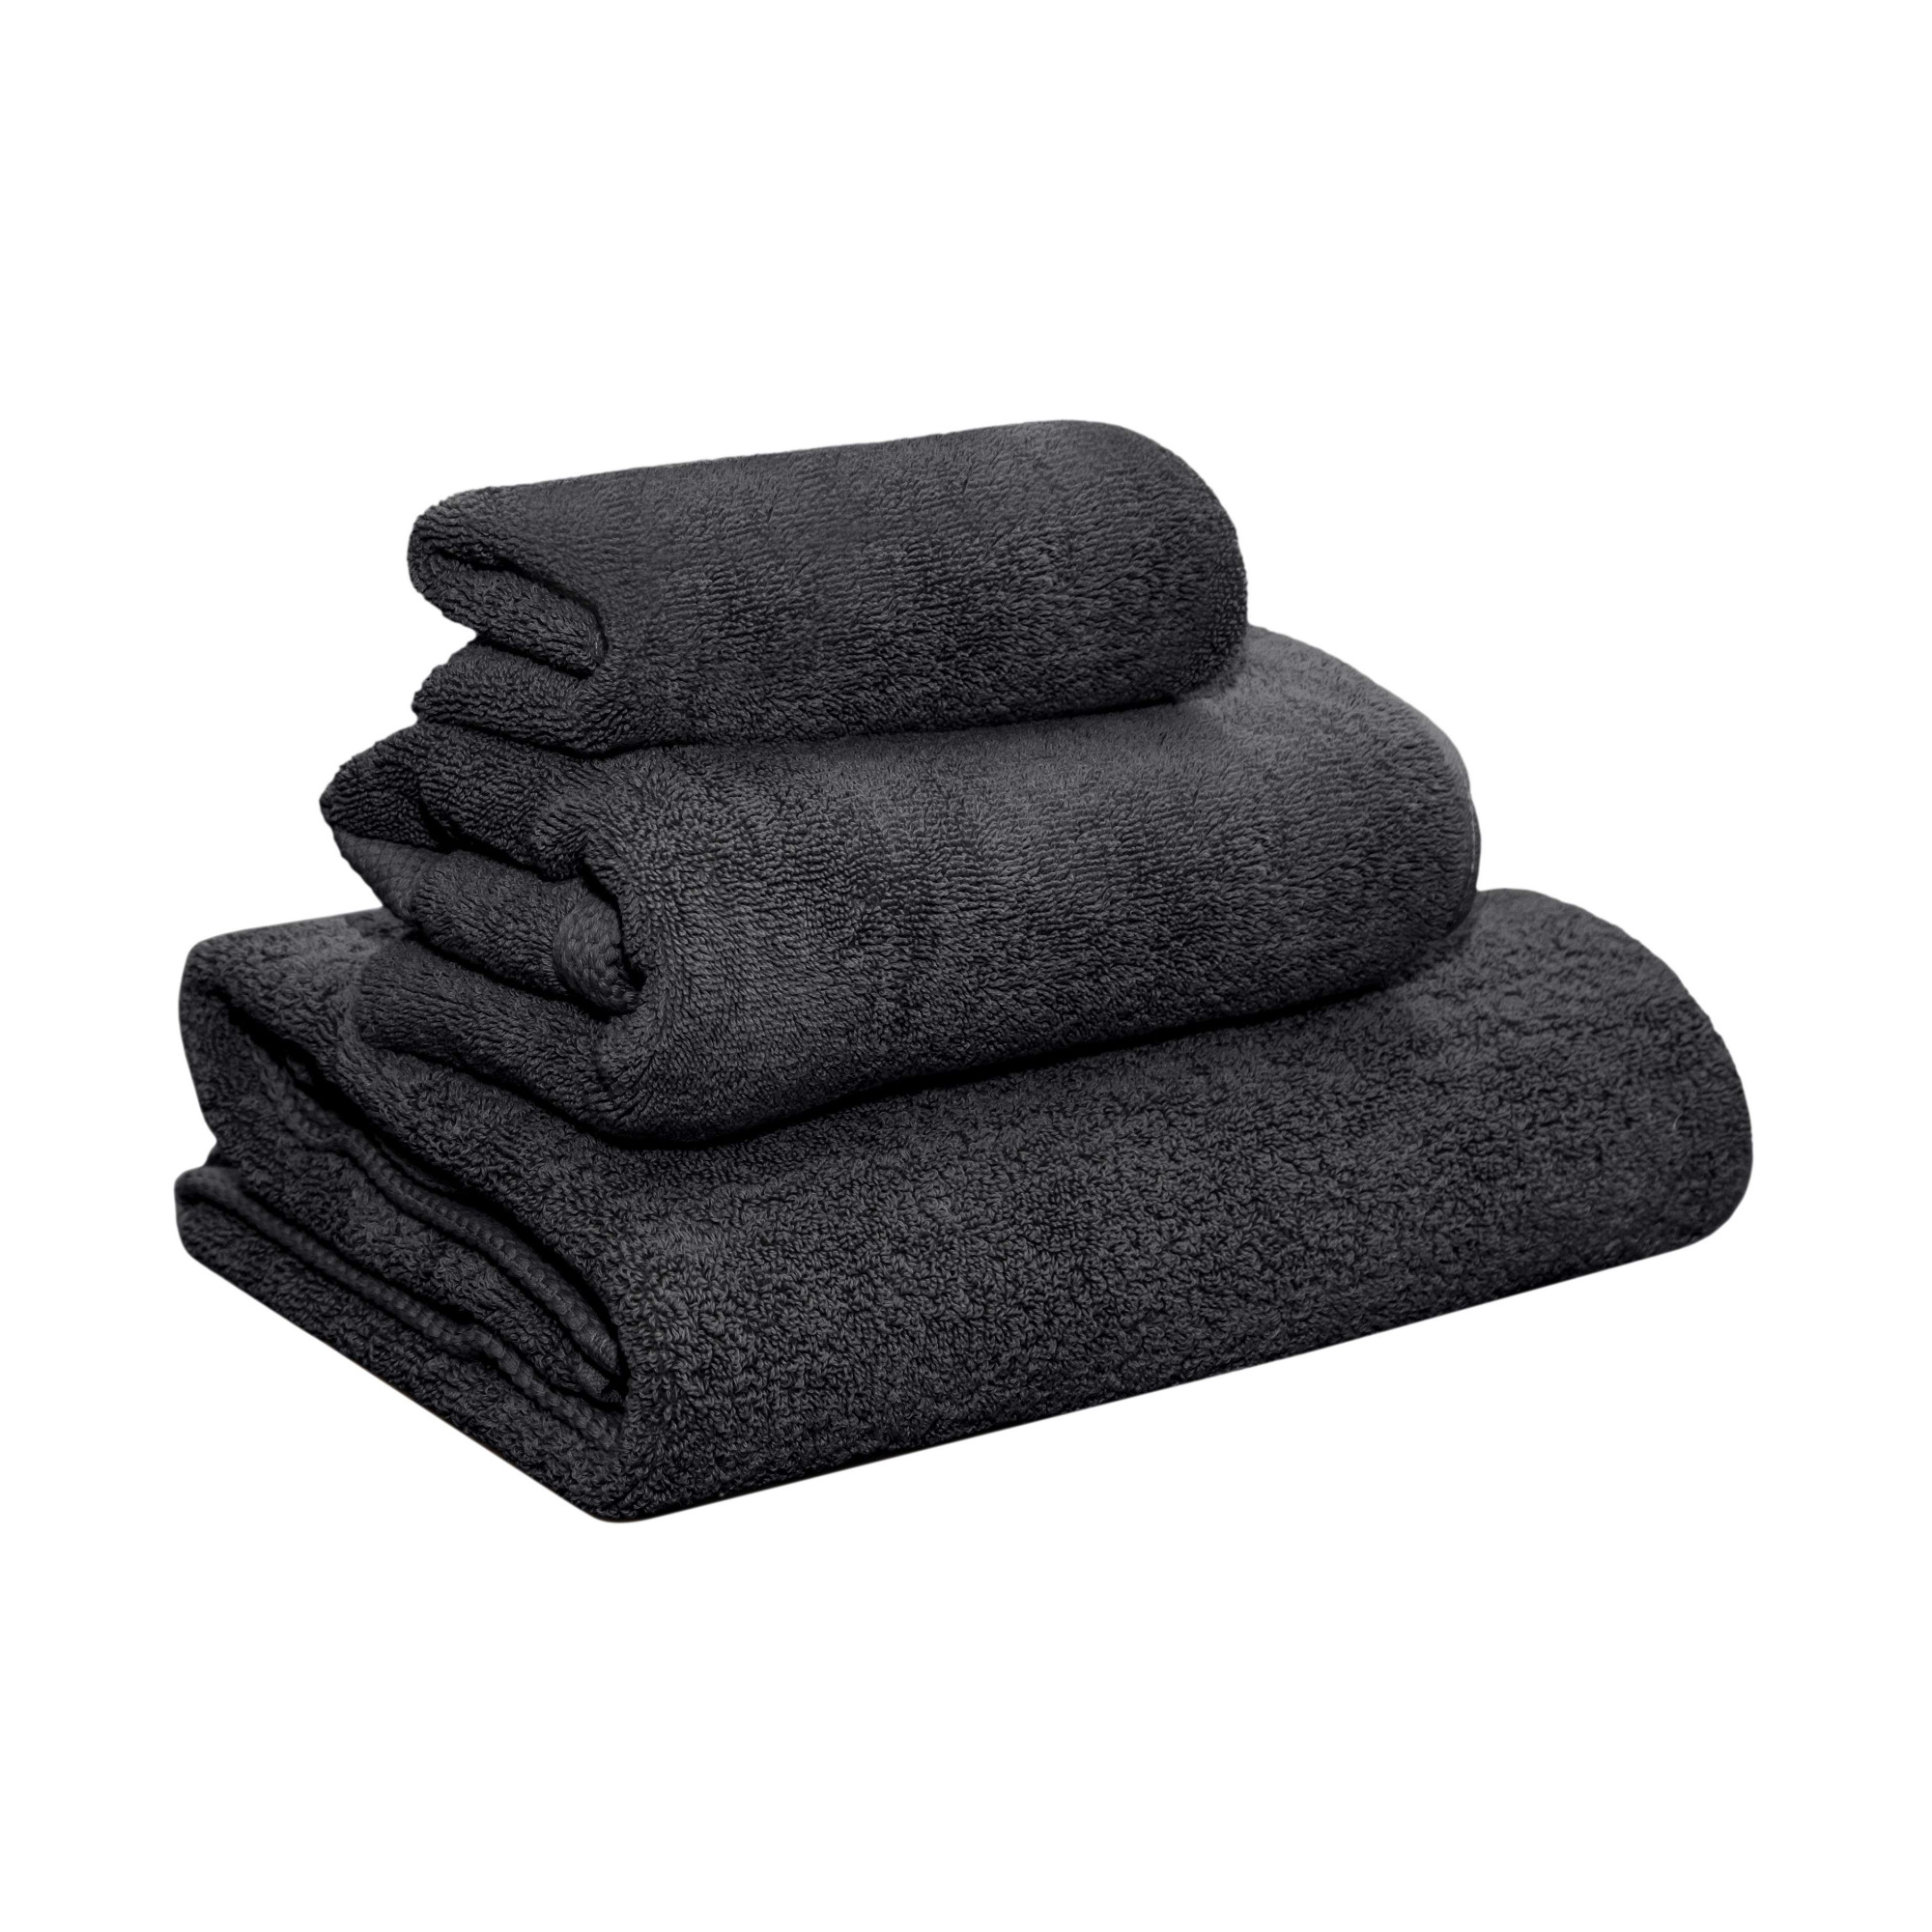 Terry towel 70x140, black, 100% cotton